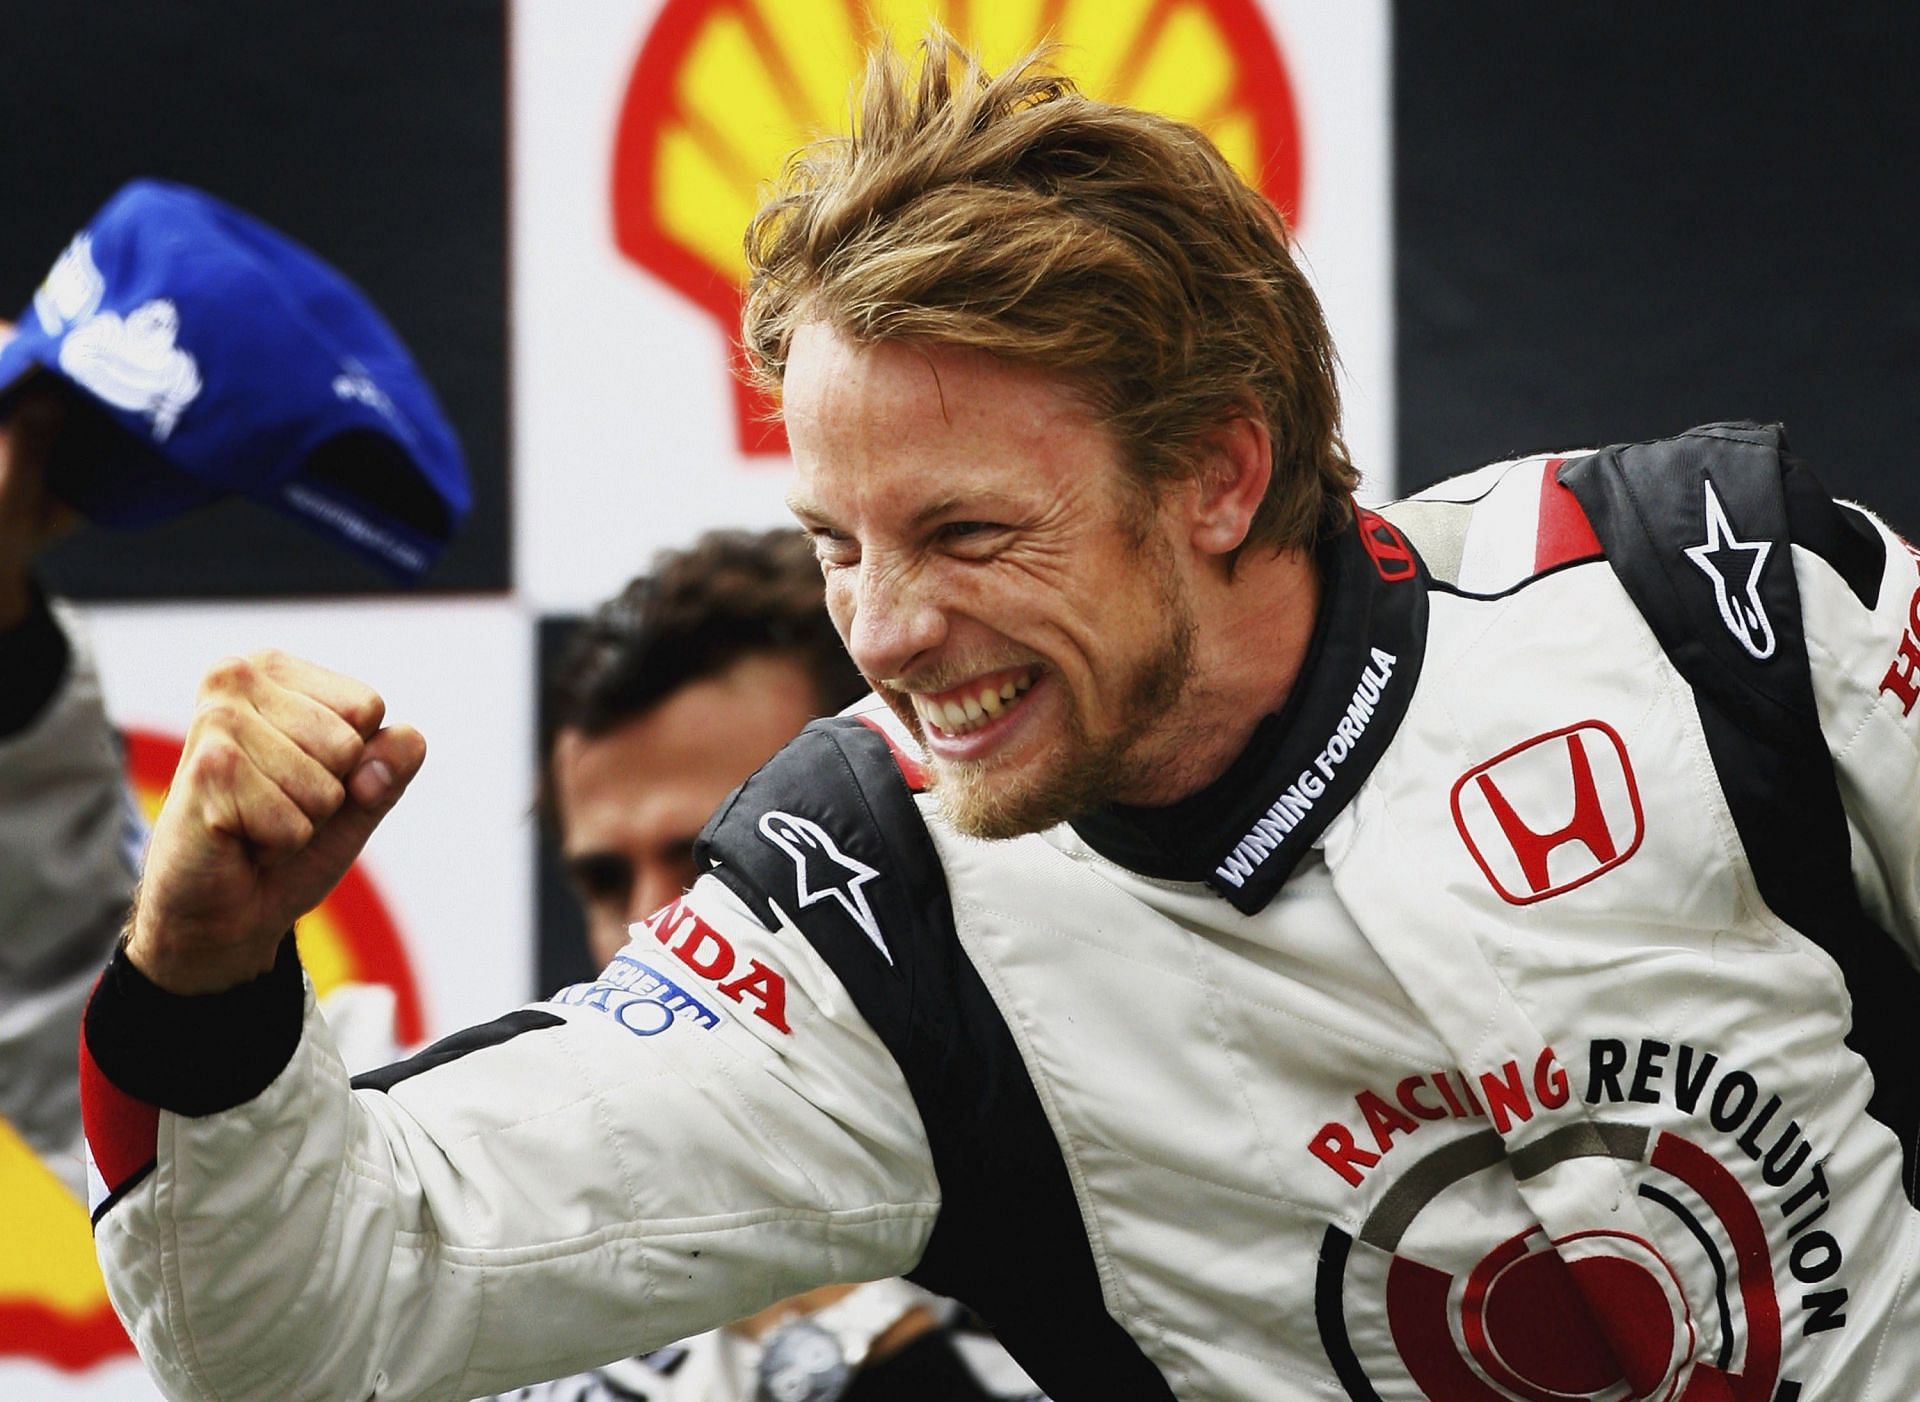 Jenson Button 2006 Hungarian GP winner